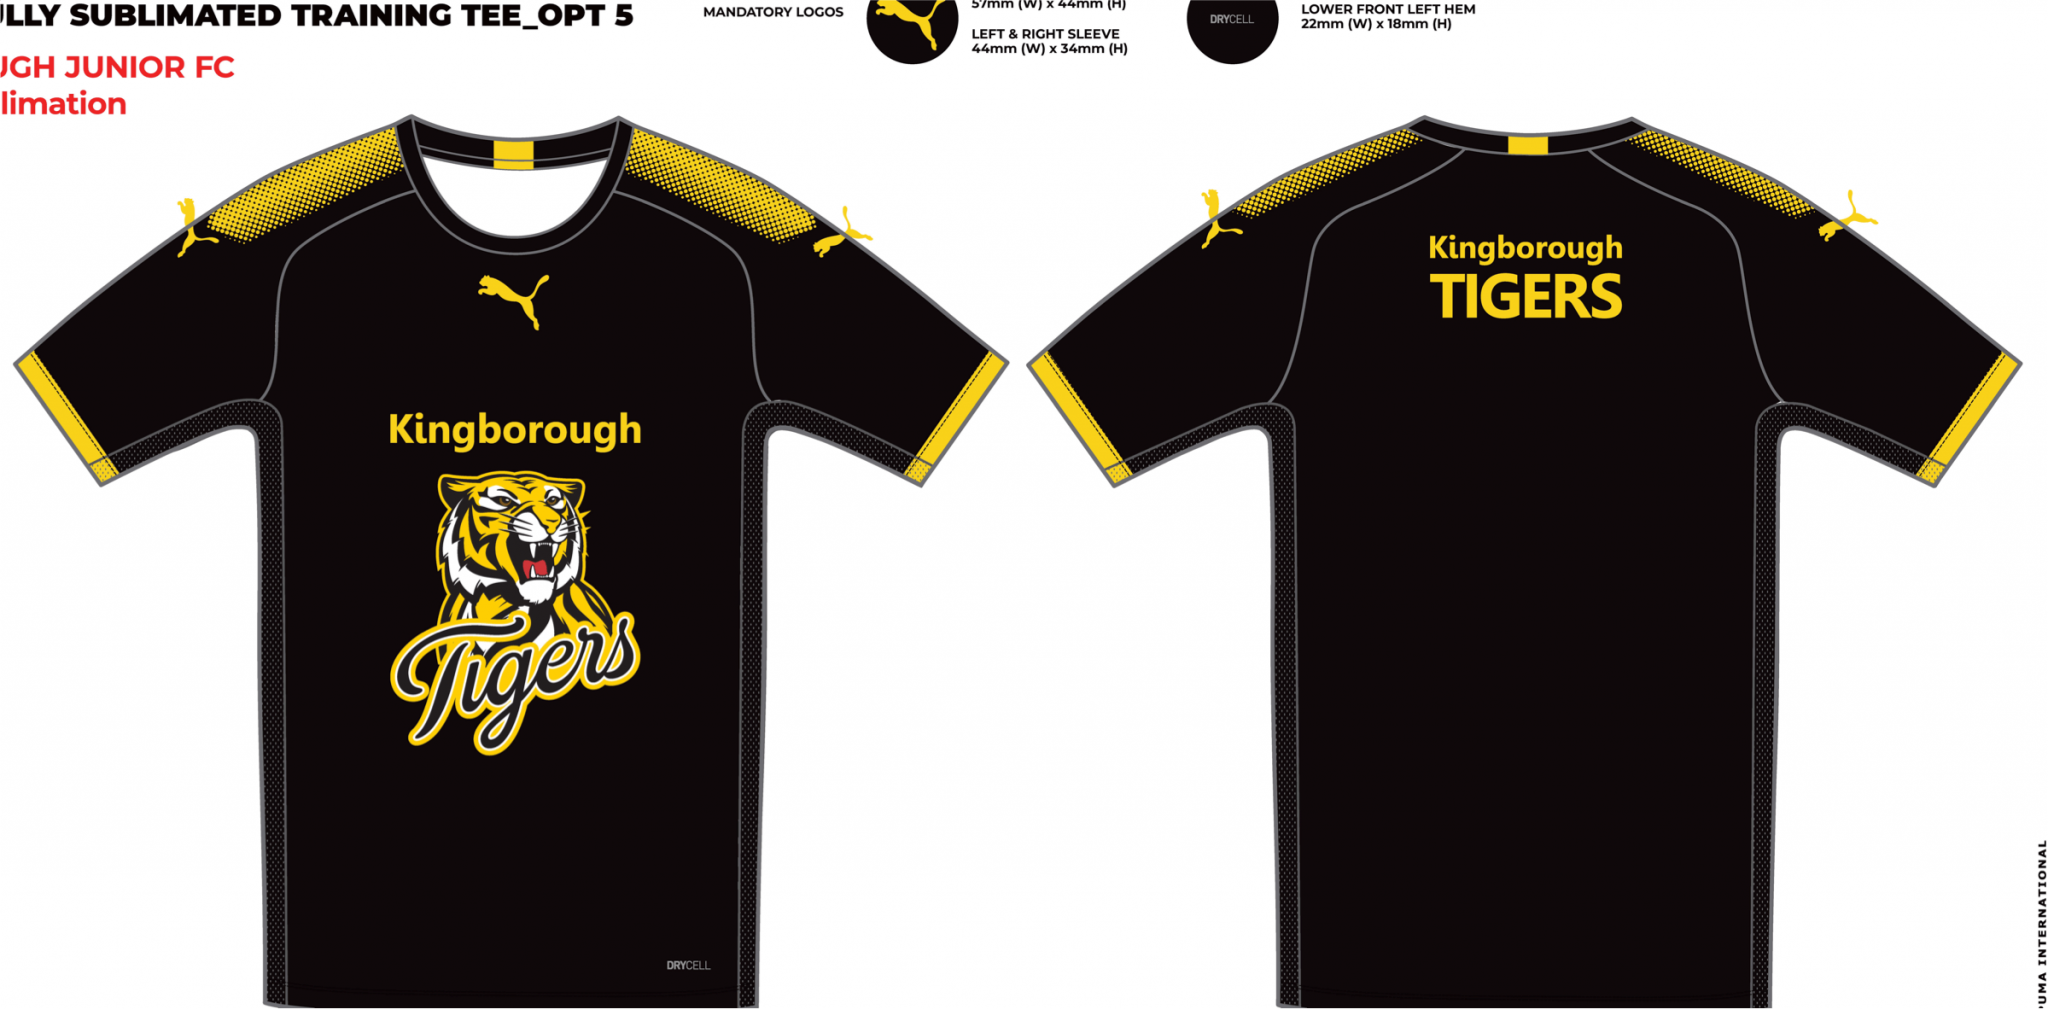 Training Tee – Kingborough Tigers JFC